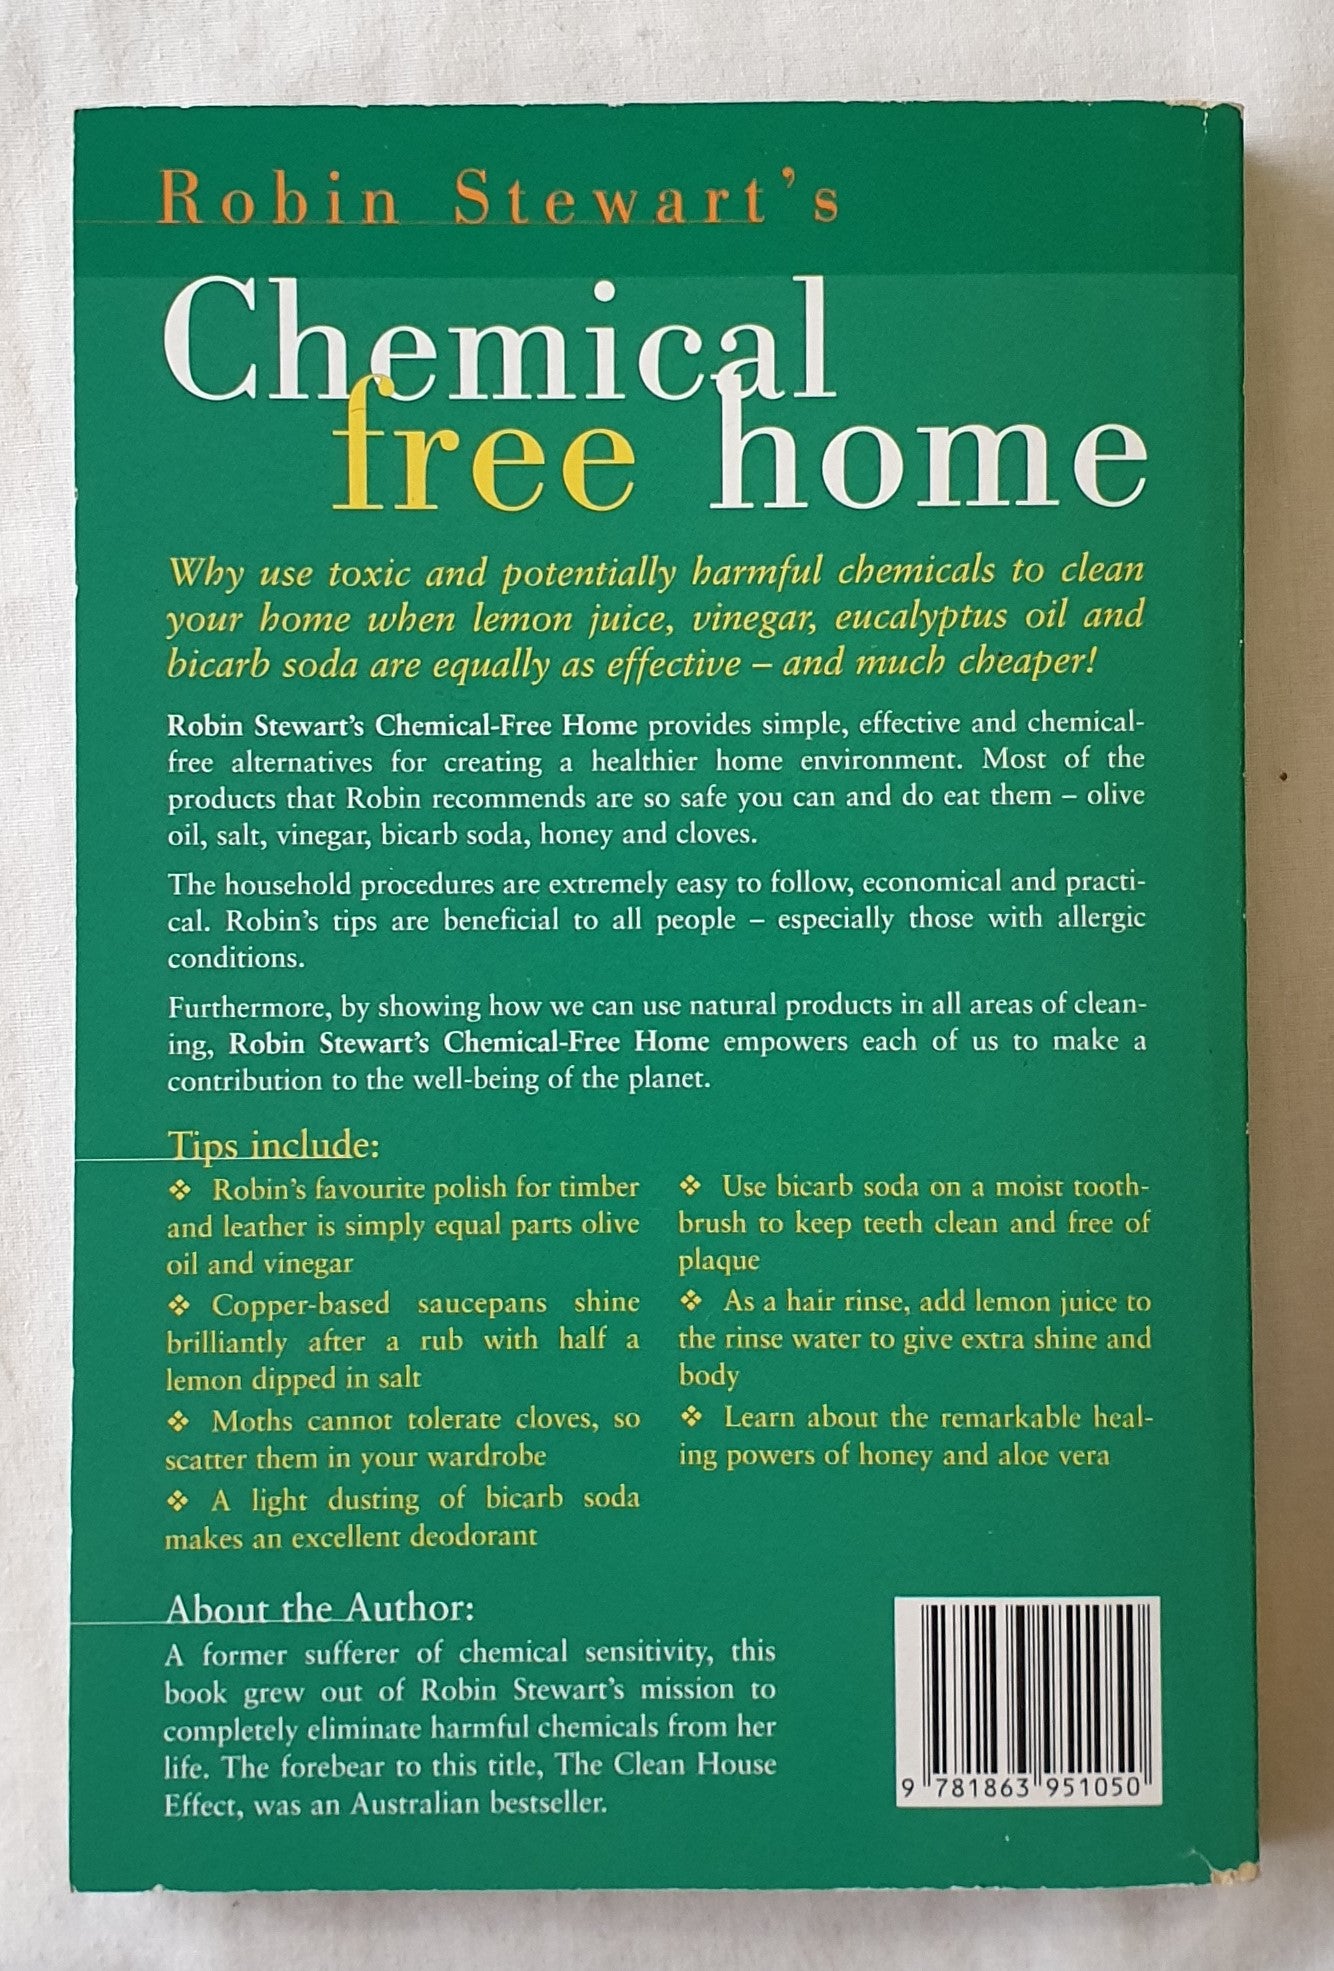 Robin Stewart’s Chemical Free Home  by Robin Stewart